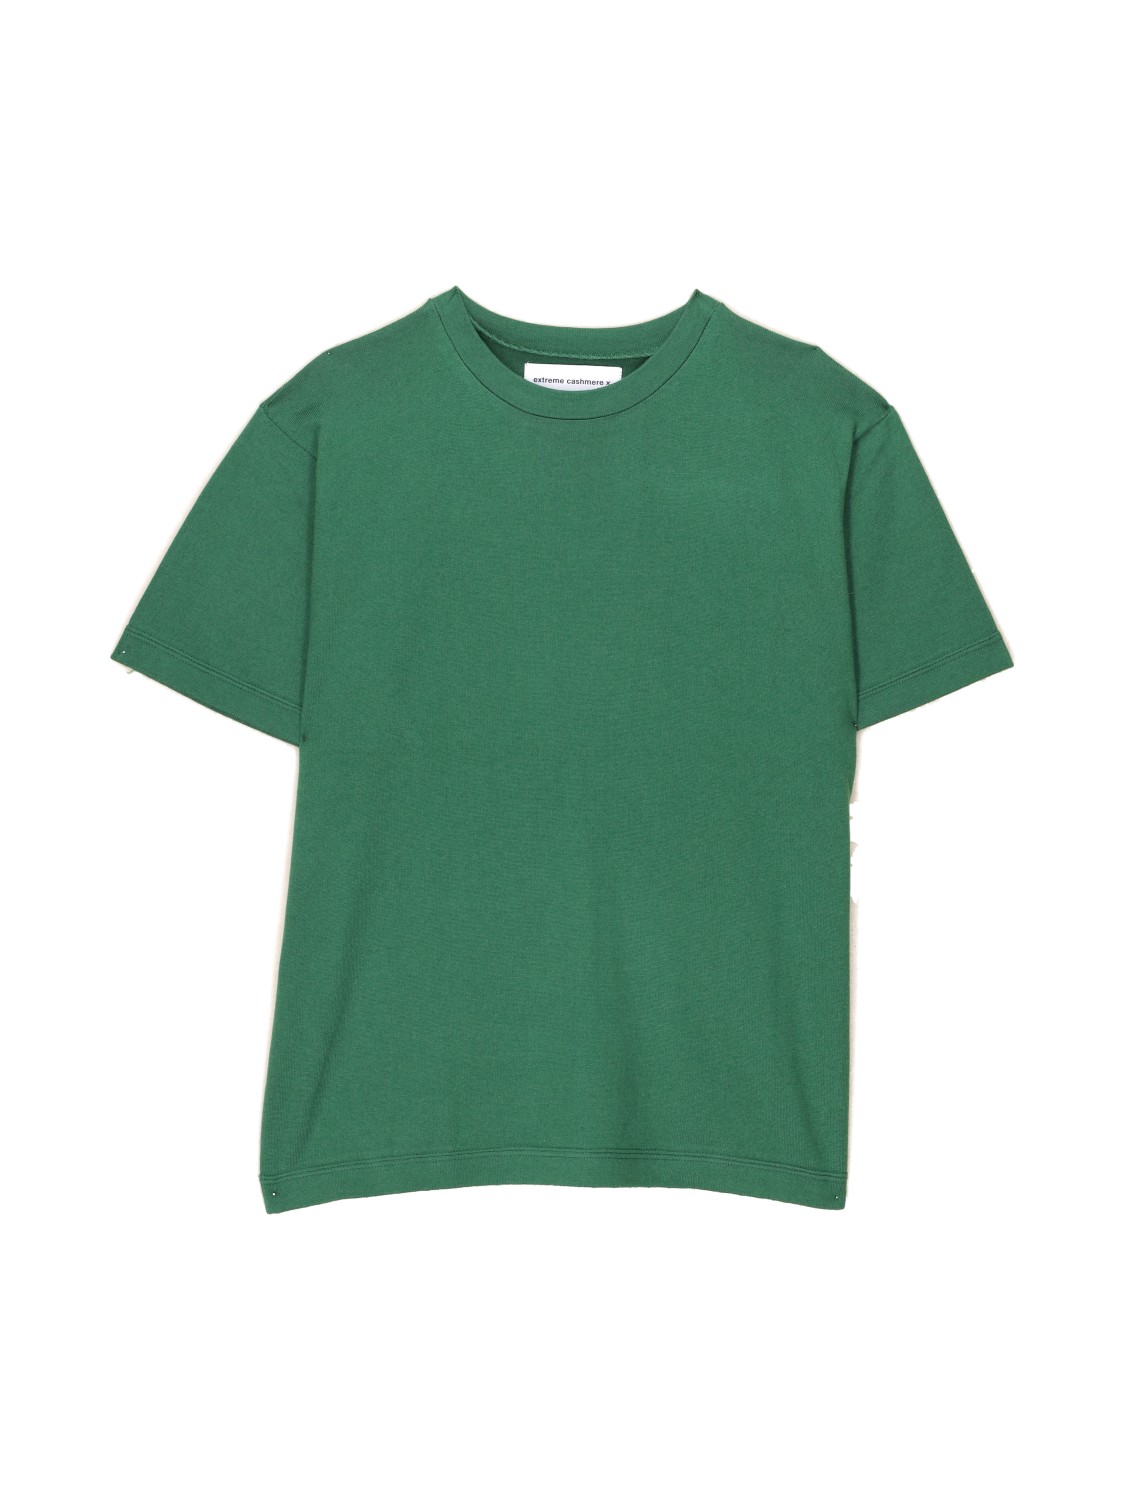 Extreme Cashmere N° 268 Cuba – Boxy-T-Shirt aus Baumwoll-Kaschmir-Mix   blau One Size